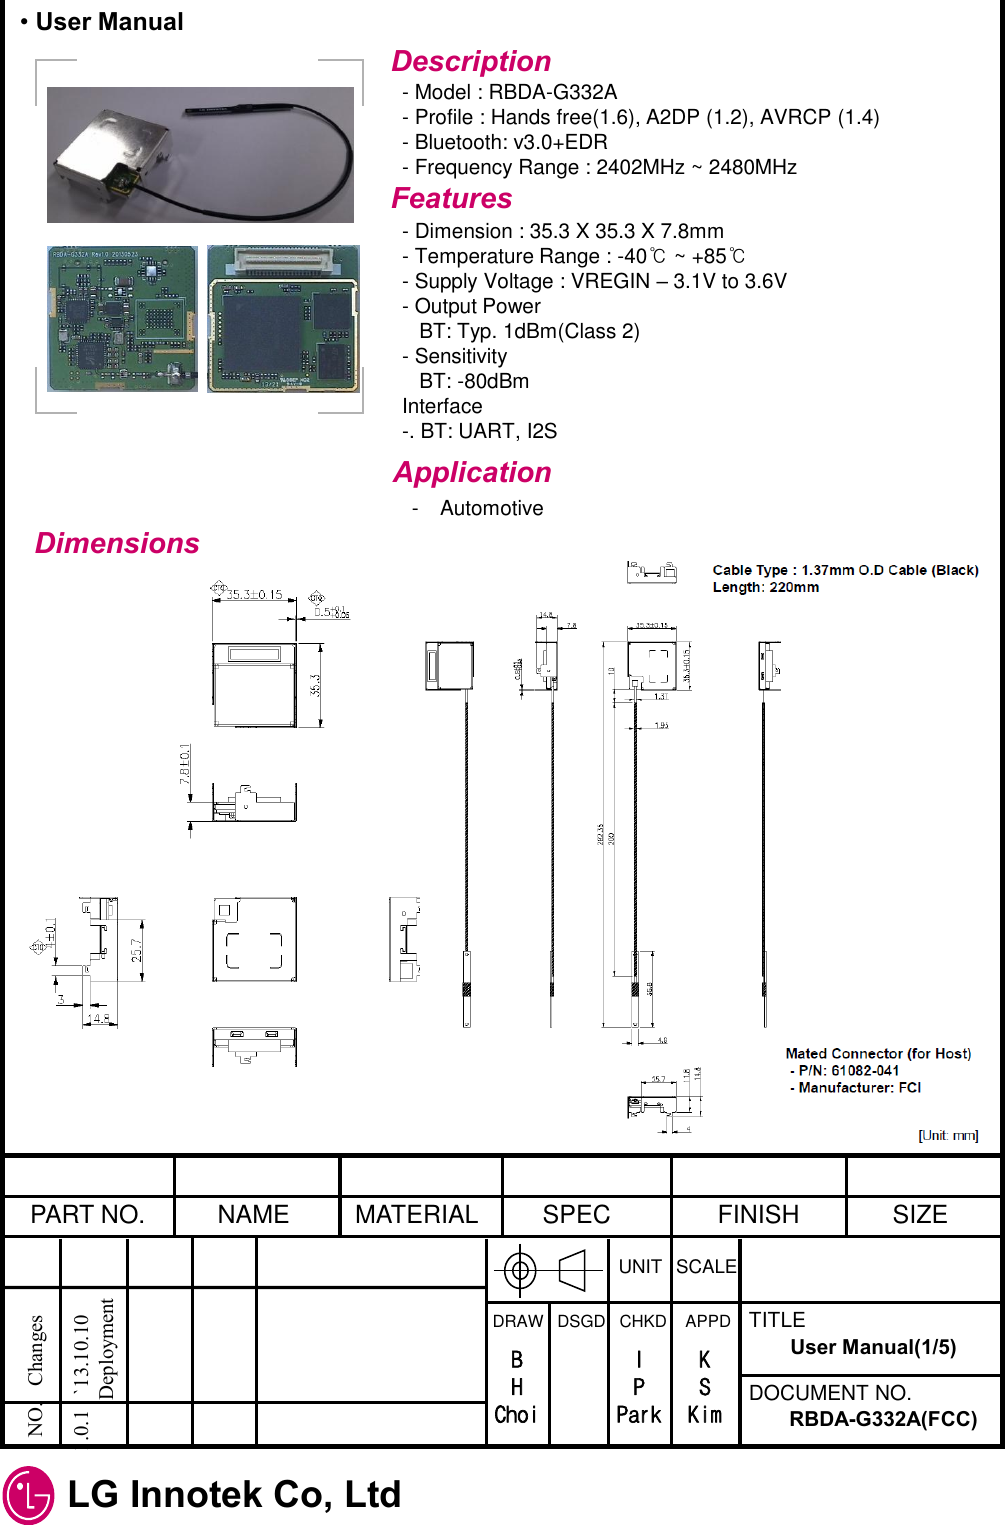  LG Innotek Co, Ltd   PART NO.  NAME  MATERIAL  SPEC  FINISH  SIZE UNIT  SCALE DRAW   DSGD   CHKD    APPD  TITLE DOCUMENT NO. NO.   Changes   1.0.1   `13.10.10             Deployment RBDA-G332A(FCC) User Manual(1/5) B H Choi I P Park K S Kim Description - Model : RBDA-G332A - Profile : Hands free(1.6), A2DP (1.2), AVRCP (1.4) - Bluetooth: v3.0+EDR - Frequency Range : 2402MHz ~ 2480MHz Features - Dimension : 35.3 X 35.3 X 7.8mm - Temperature Range : -40℃ ~ +85℃ - Supply Voltage : VREGIN – 3.1V to 3.6V - Output Power    BT: Typ. 1dBm(Class 2) - Sensitivity    BT: -80dBm Interface -. BT: UART, I2S Application - Automotive Dimensions • User Manual 